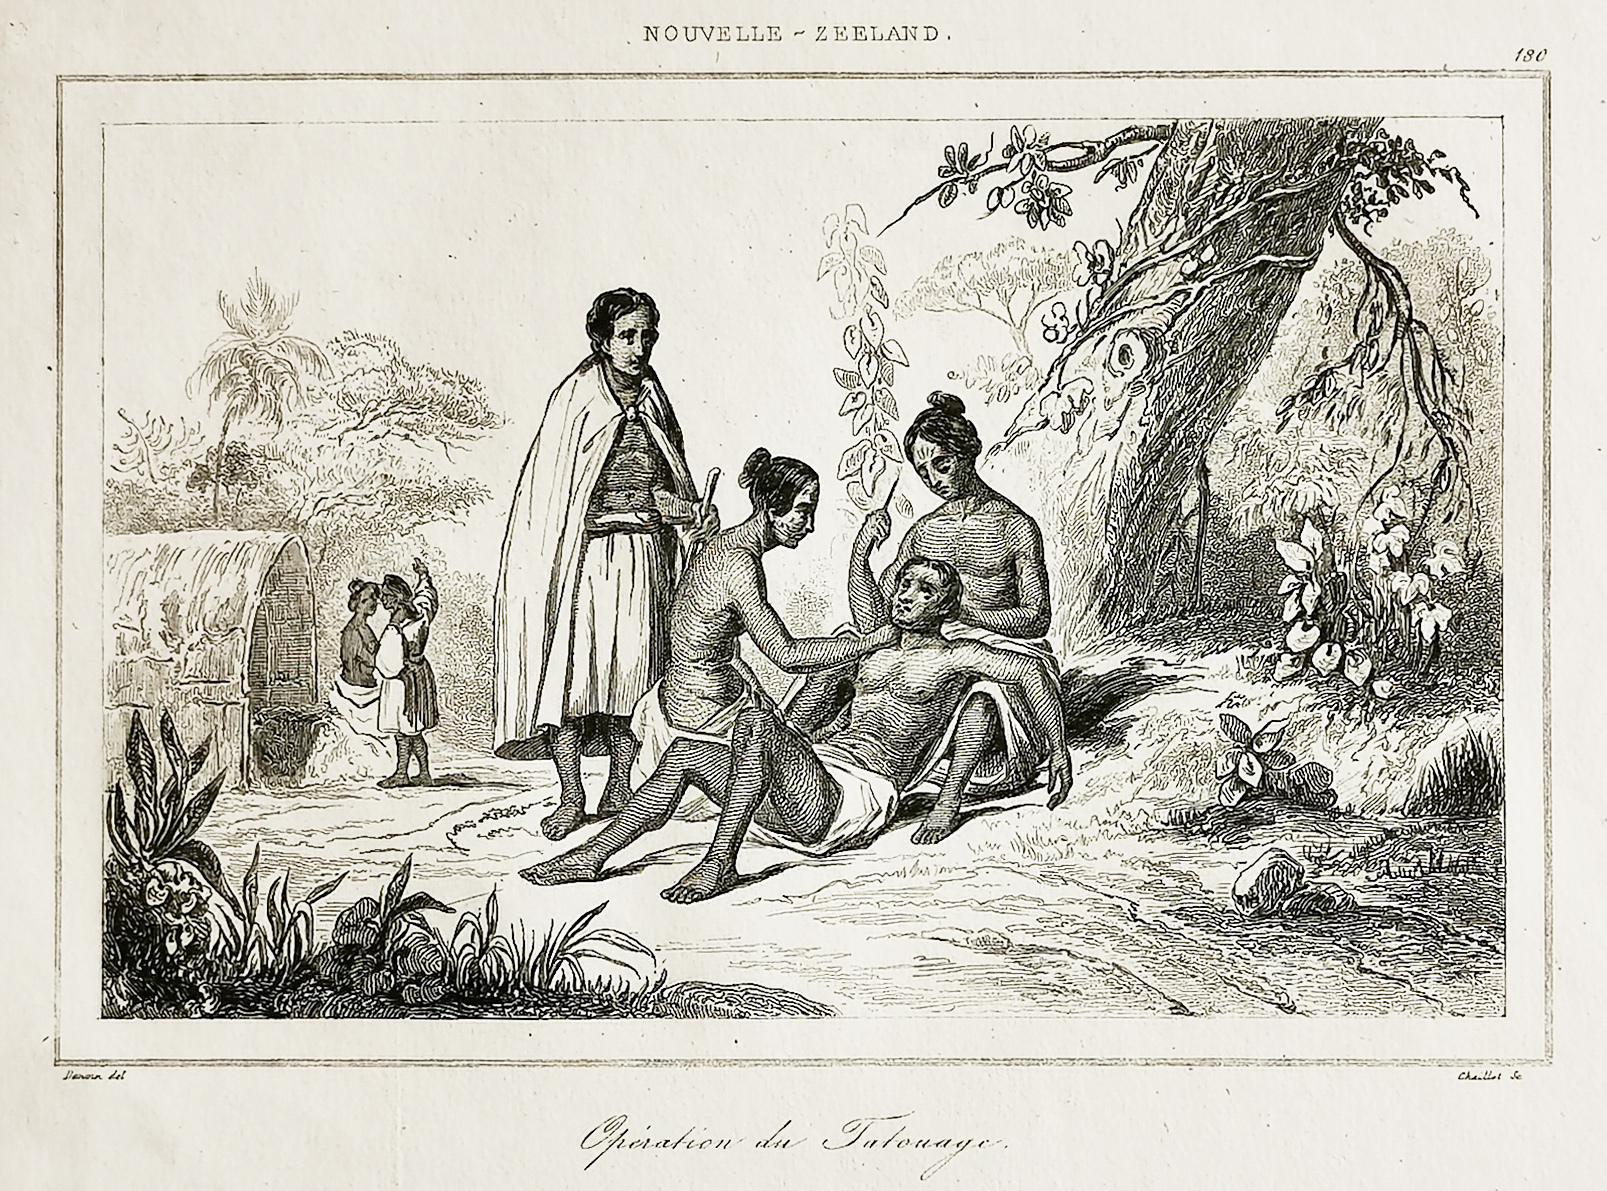 Operation du Tatouage. - Antique Print from 1840